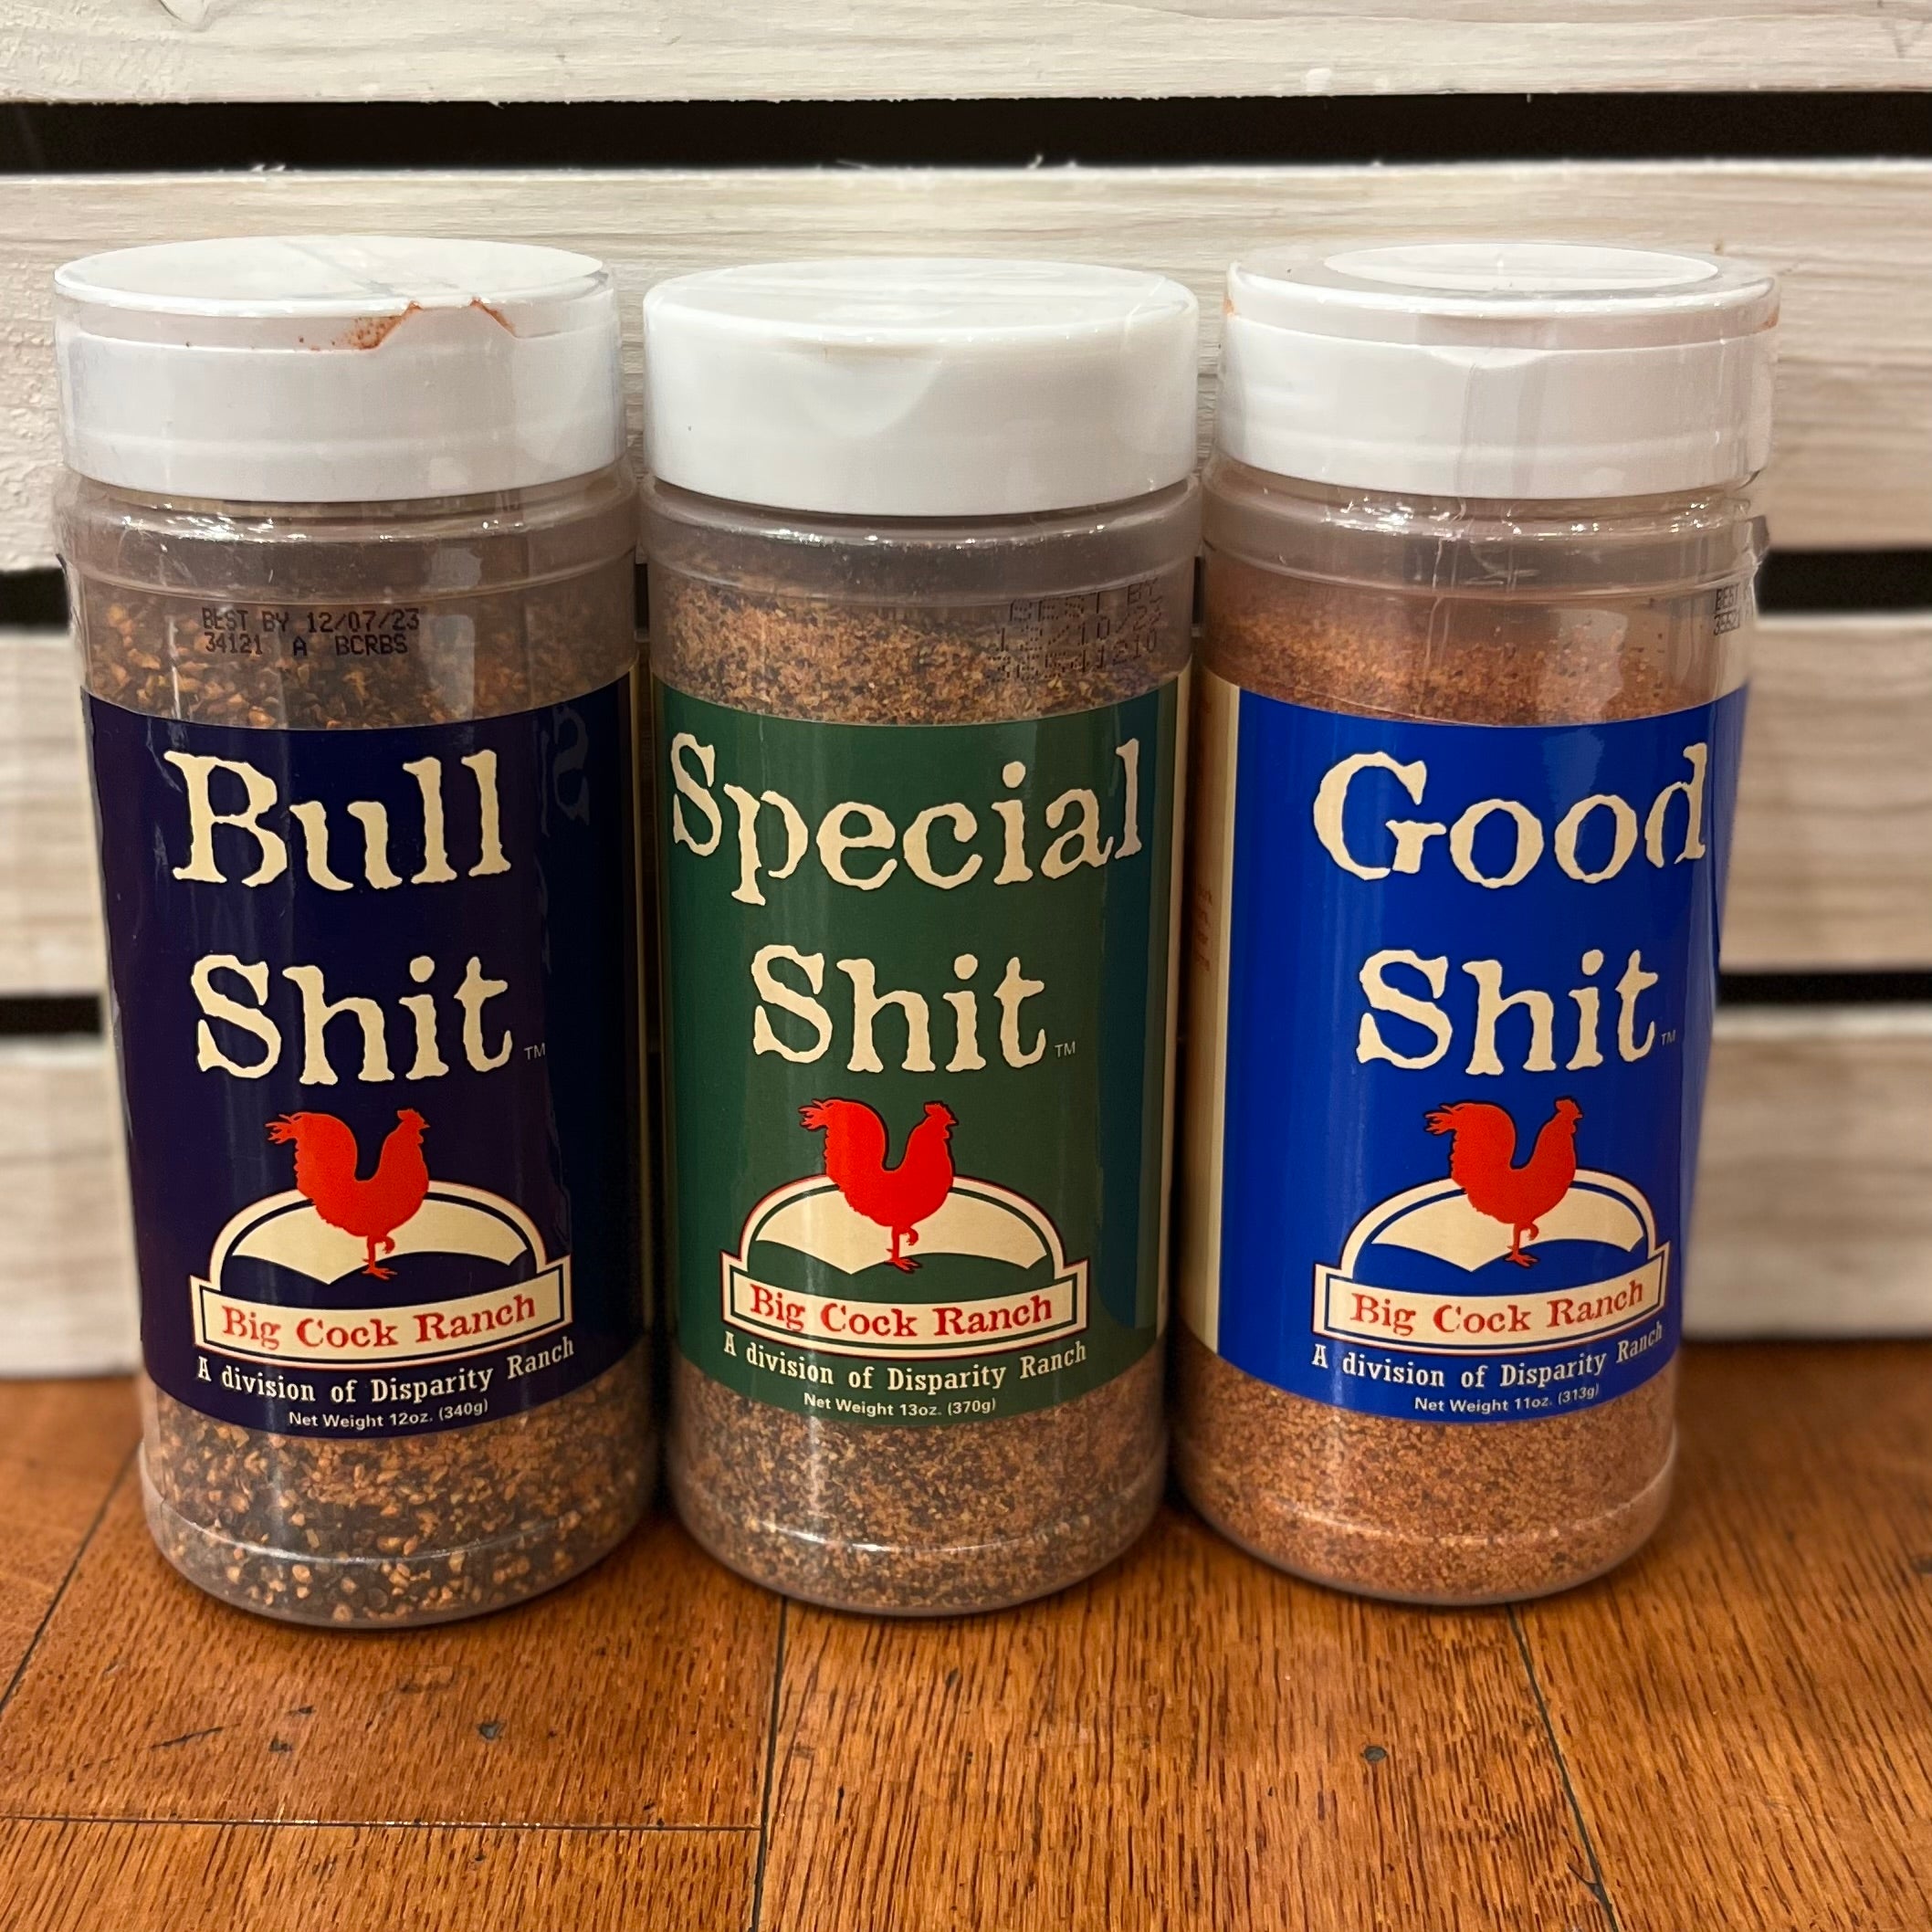  Big Cock Ranch All-Purpose Premium Seasoning Special Shit,  Bull Shit, and Good Shit : Grocery & Gourmet Food